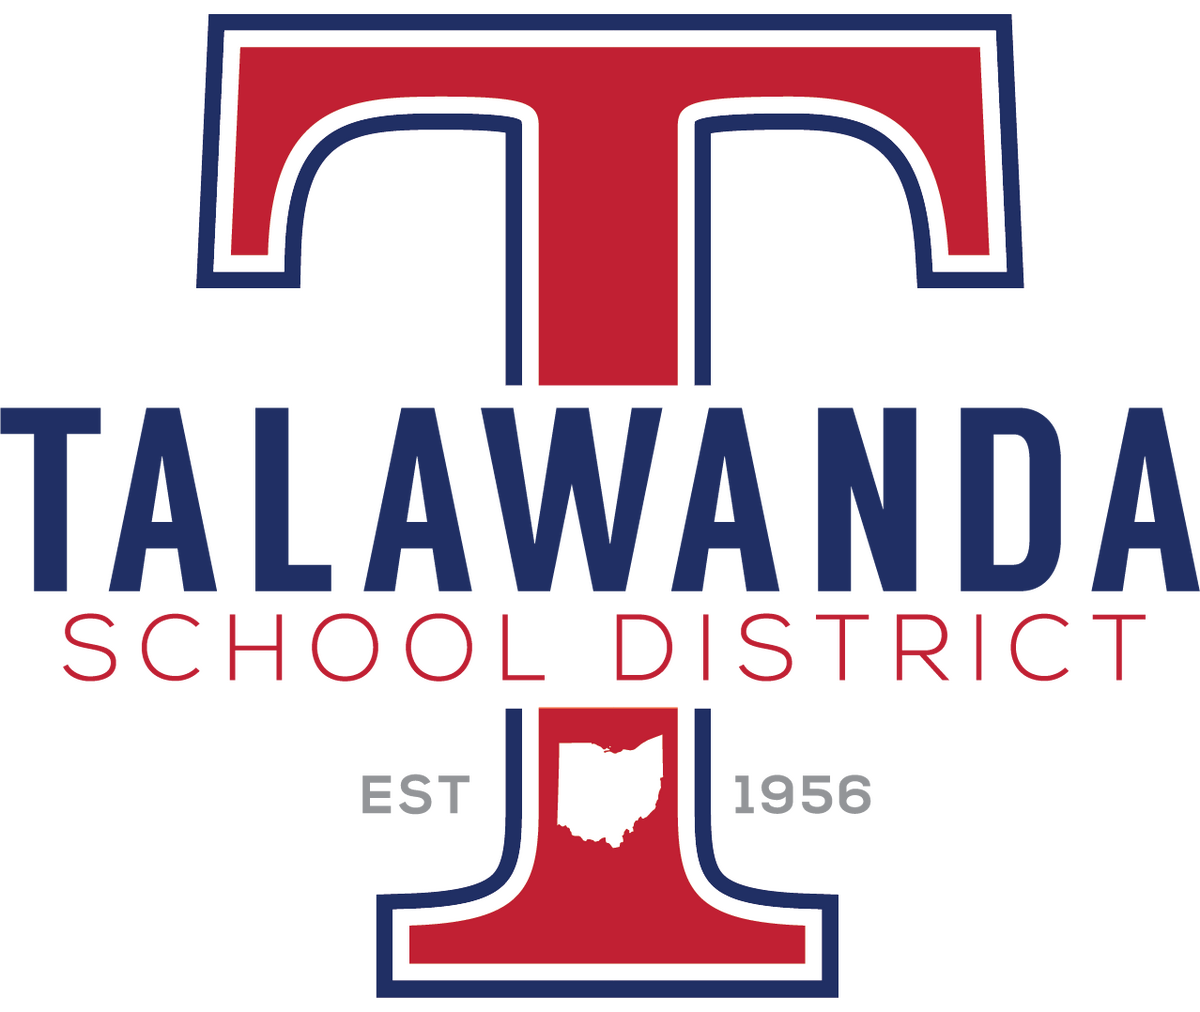 Talanwada School District logo